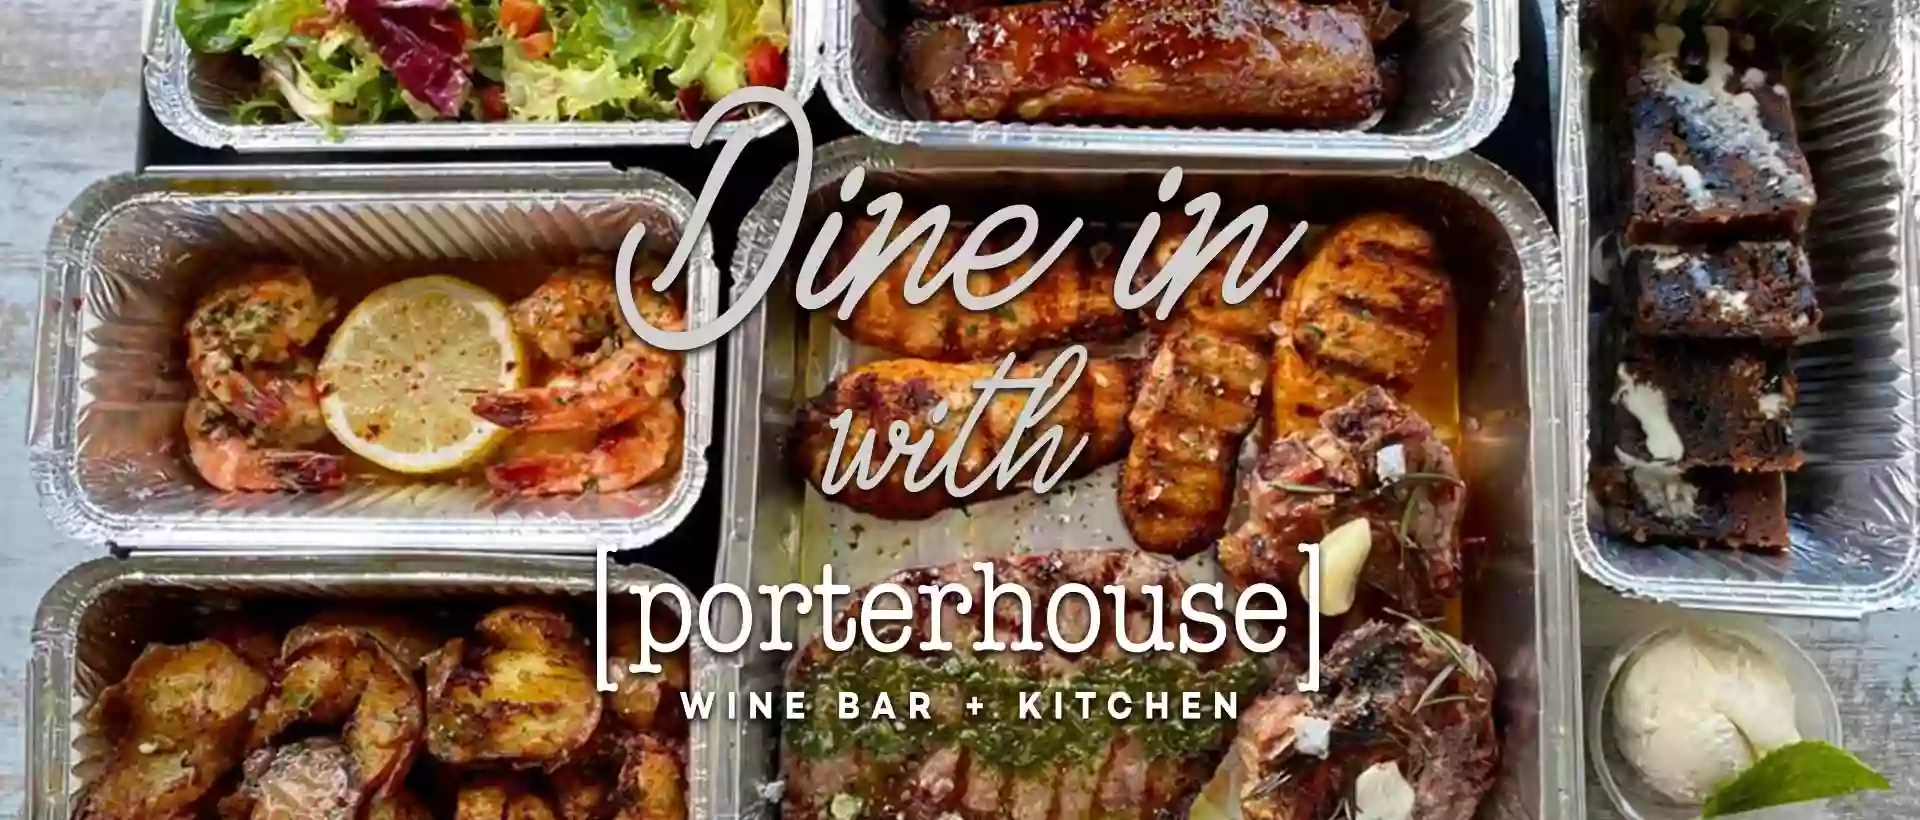 Porterhouse Wine Bar + Kitchen